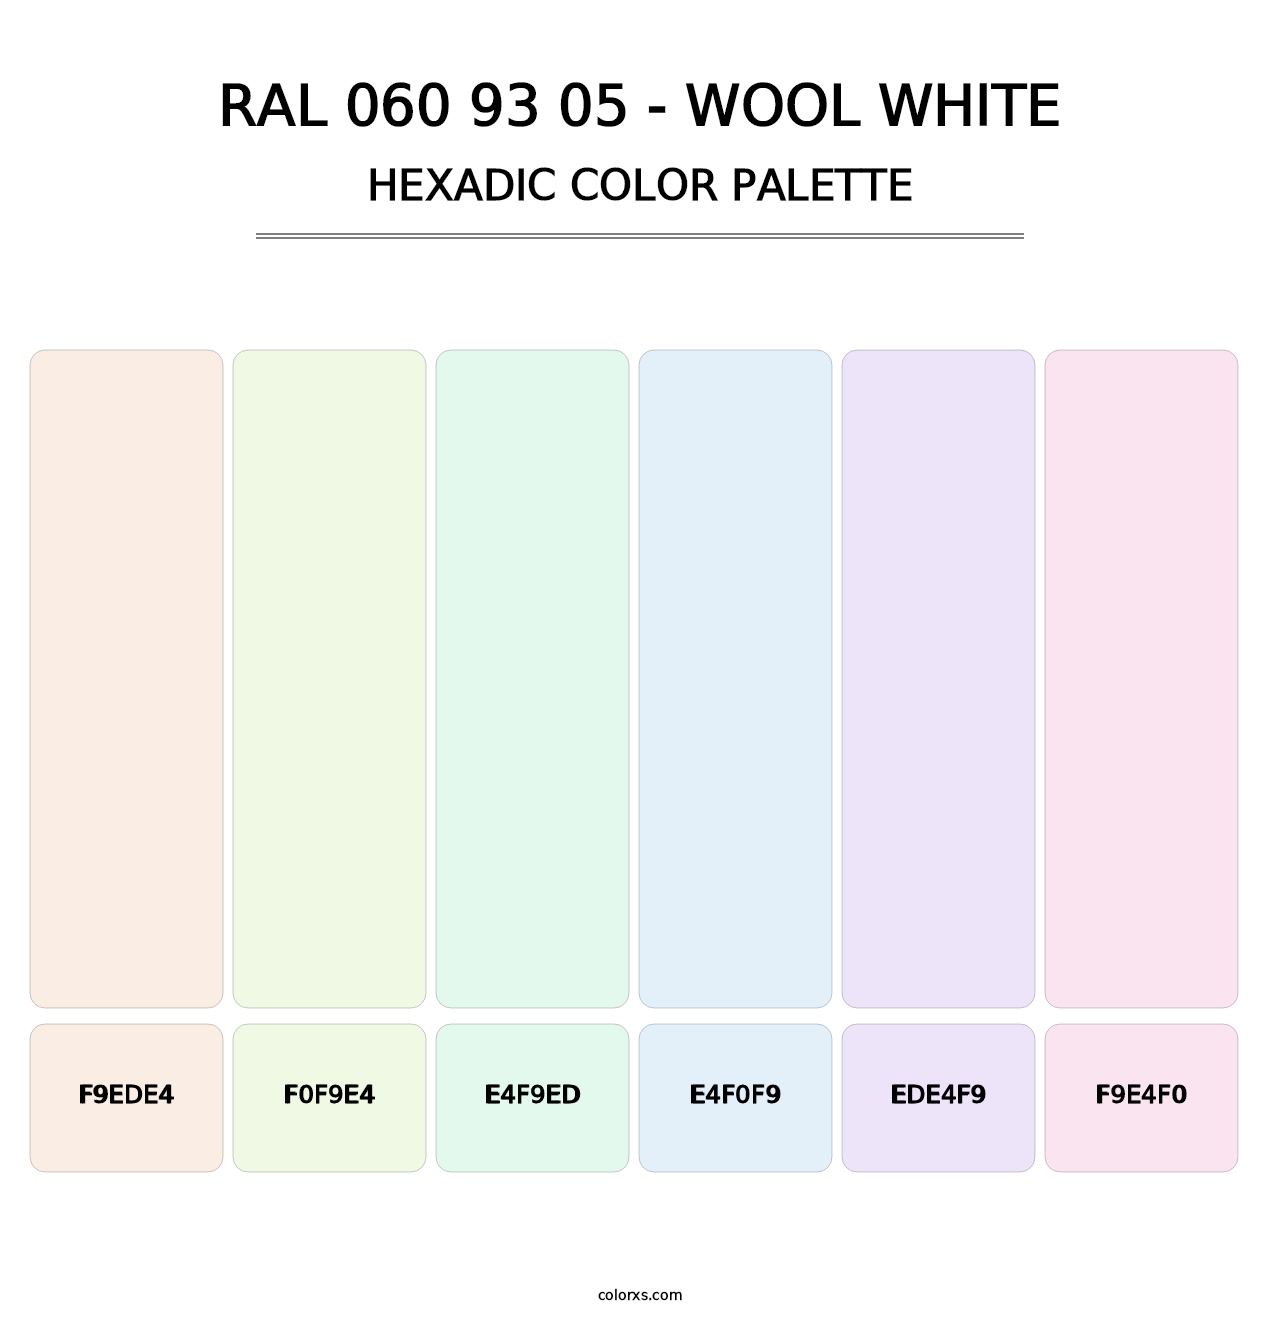 RAL 060 93 05 - Wool White - Hexadic Color Palette